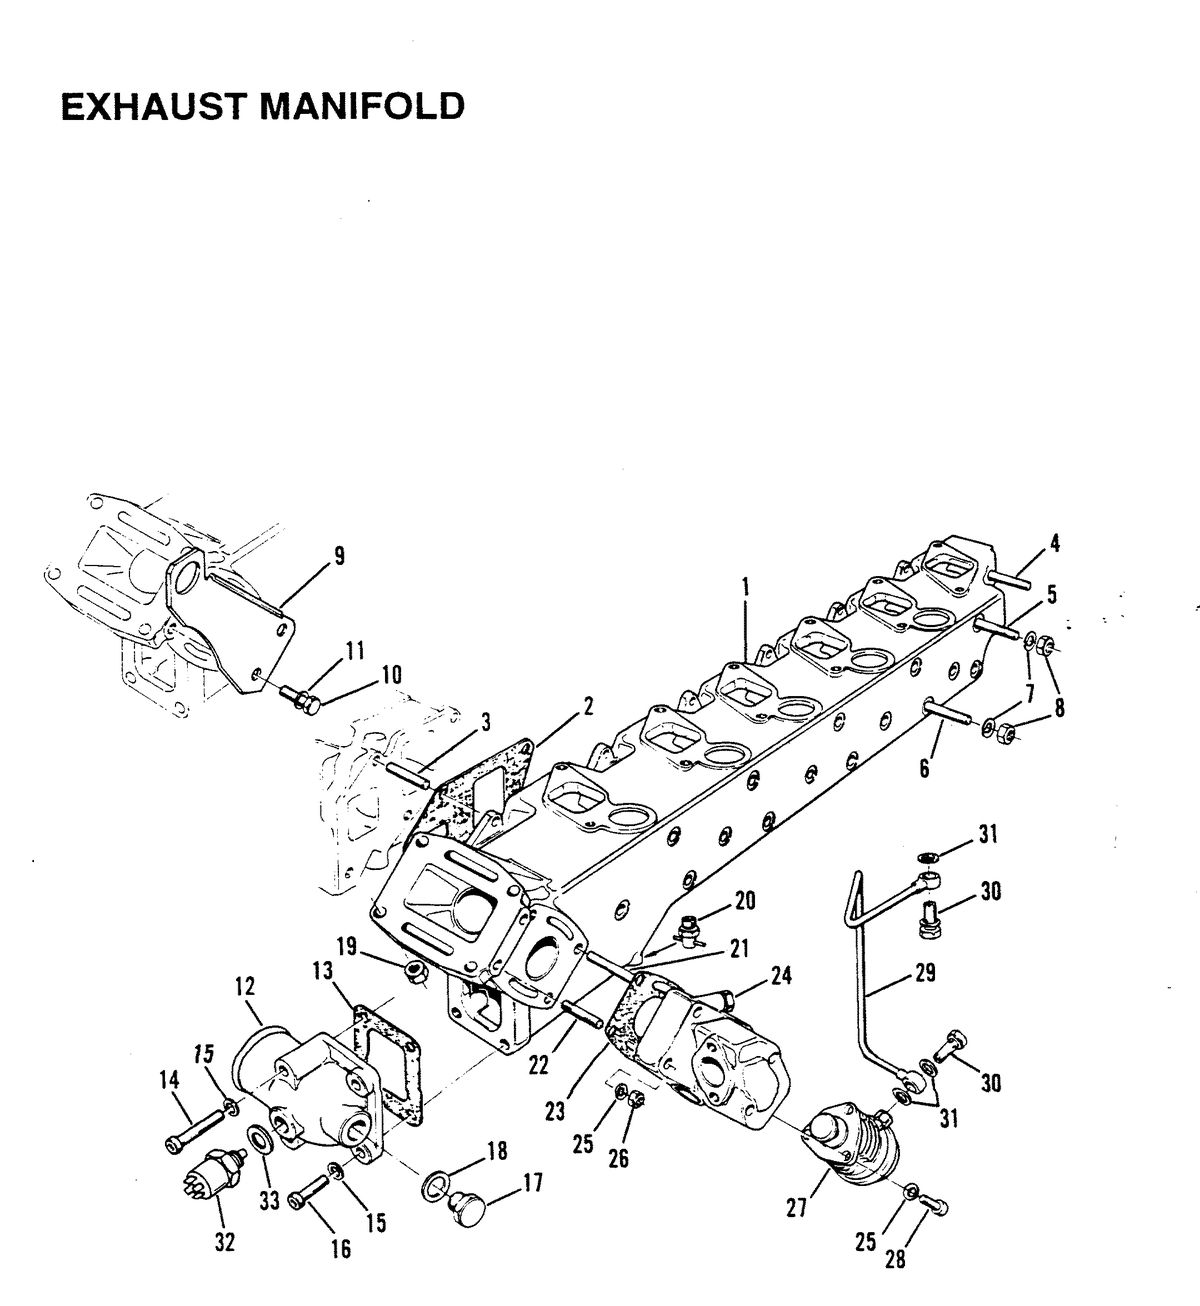 MERCRUISER D-254 TURBO ACDIESEL ENGINE STERN DRIVE/INBOARD EXHAUST MANIFOLD